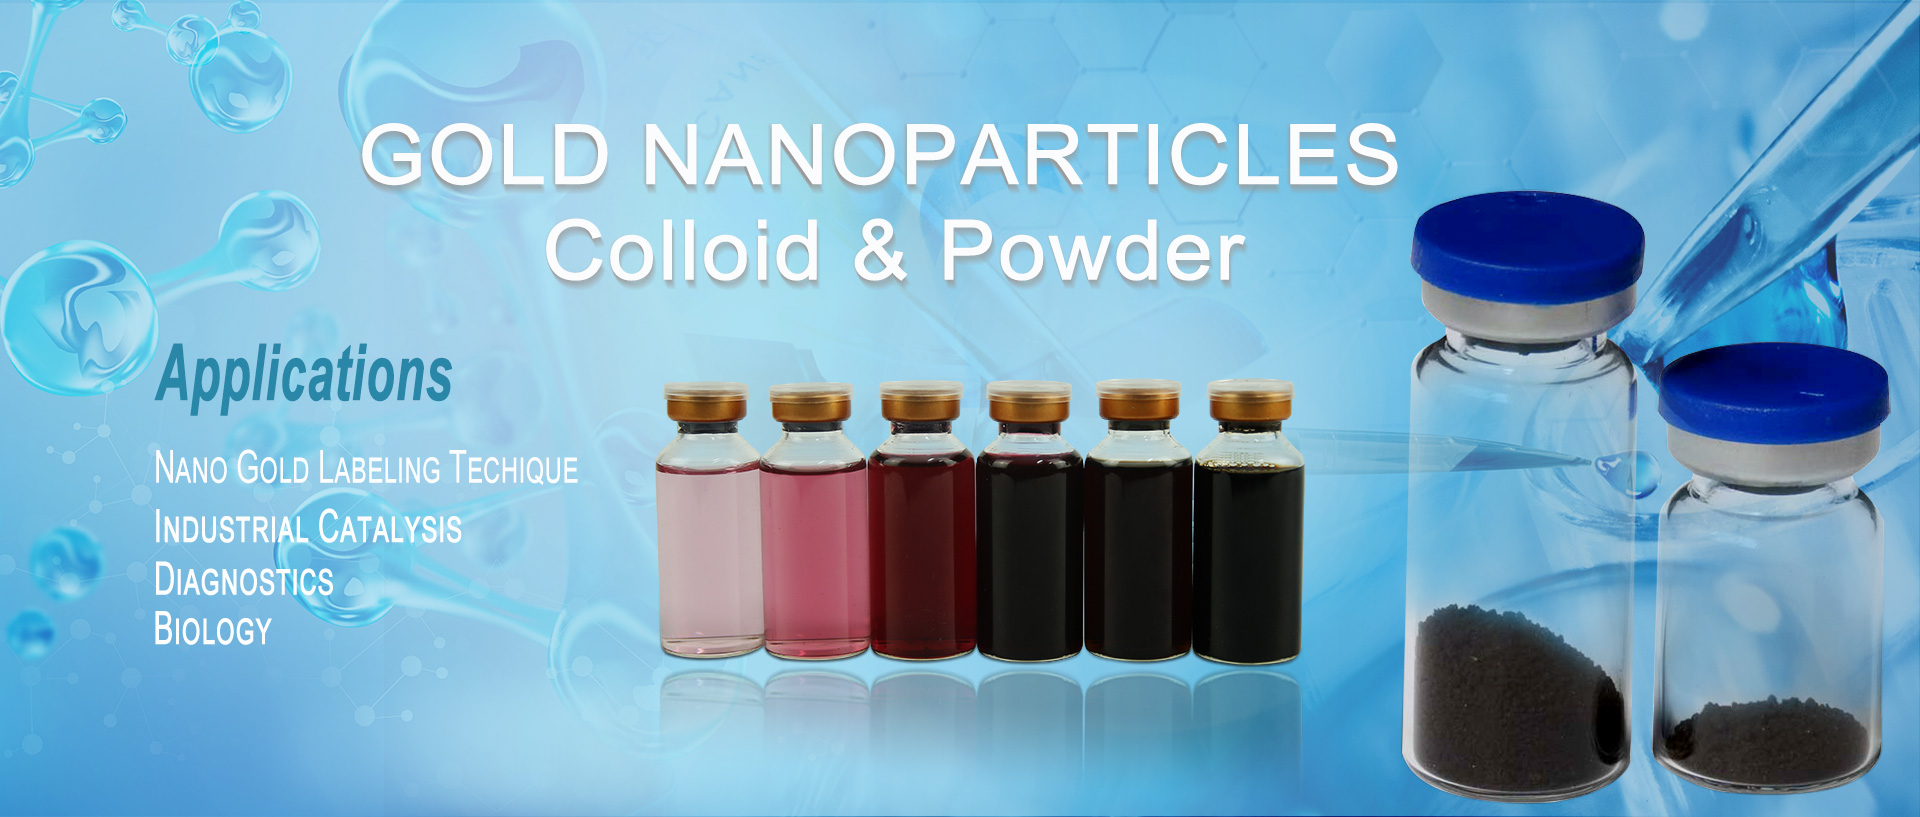 guld nanopartikler